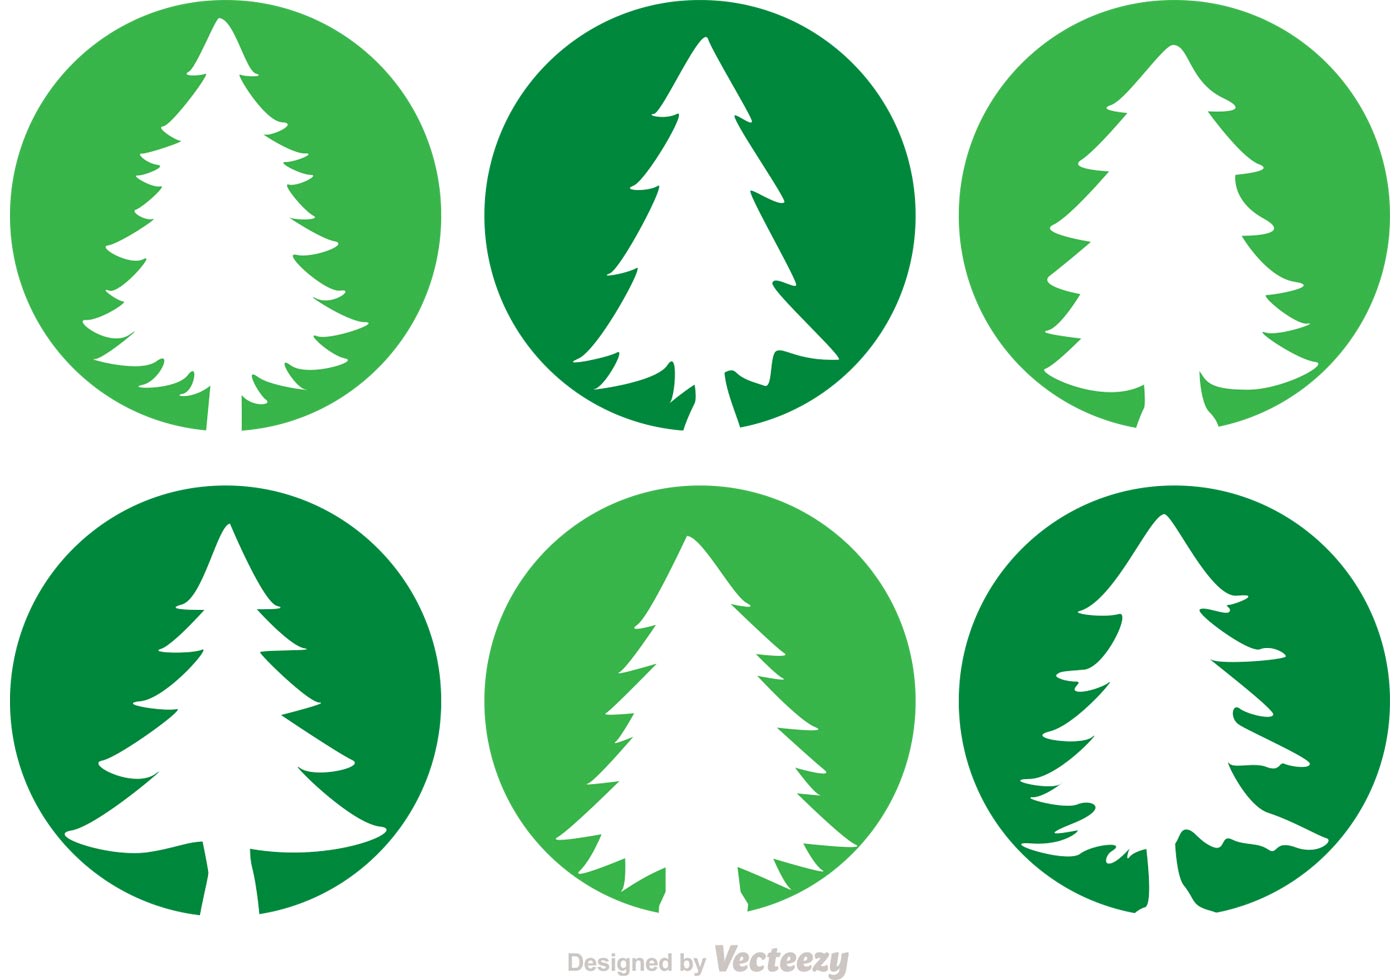 Cedar Tree Vectors - Download Free Vector Art, Stock Graphics & Images